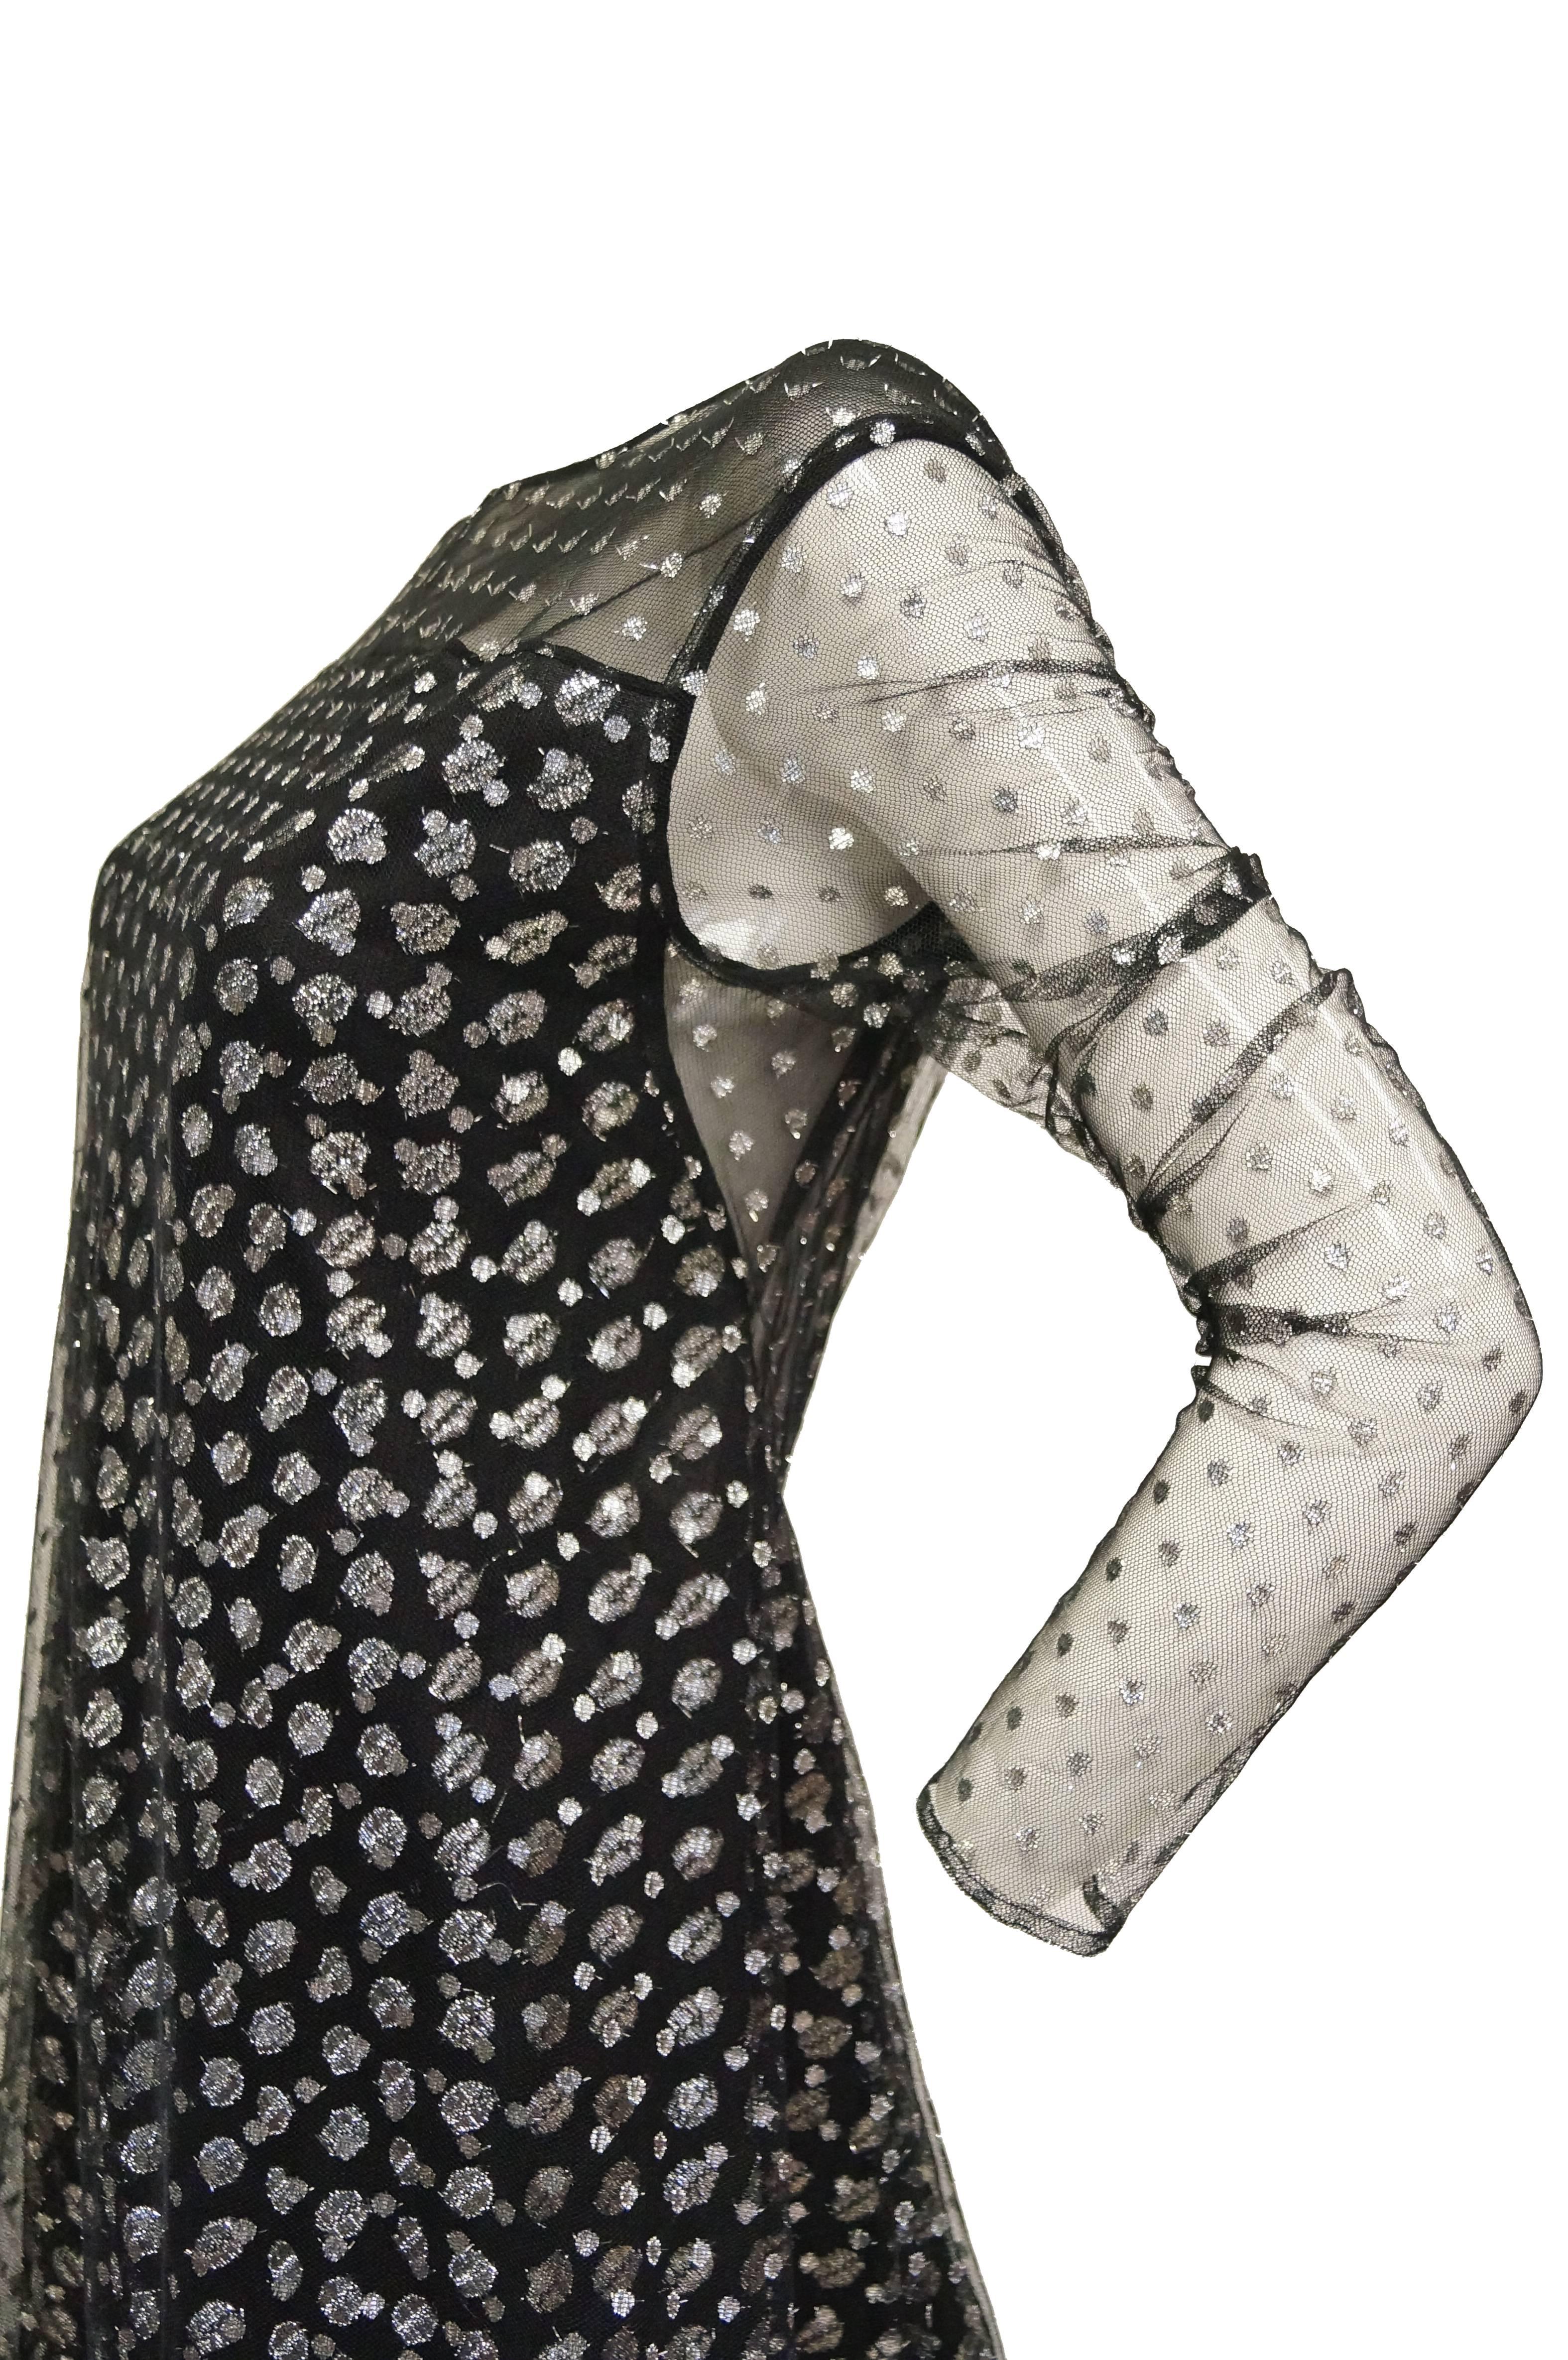 Women's 1990s Geoffrey Beene Black and Silver Metallic Polka Dot Dress 6-8 For Sale